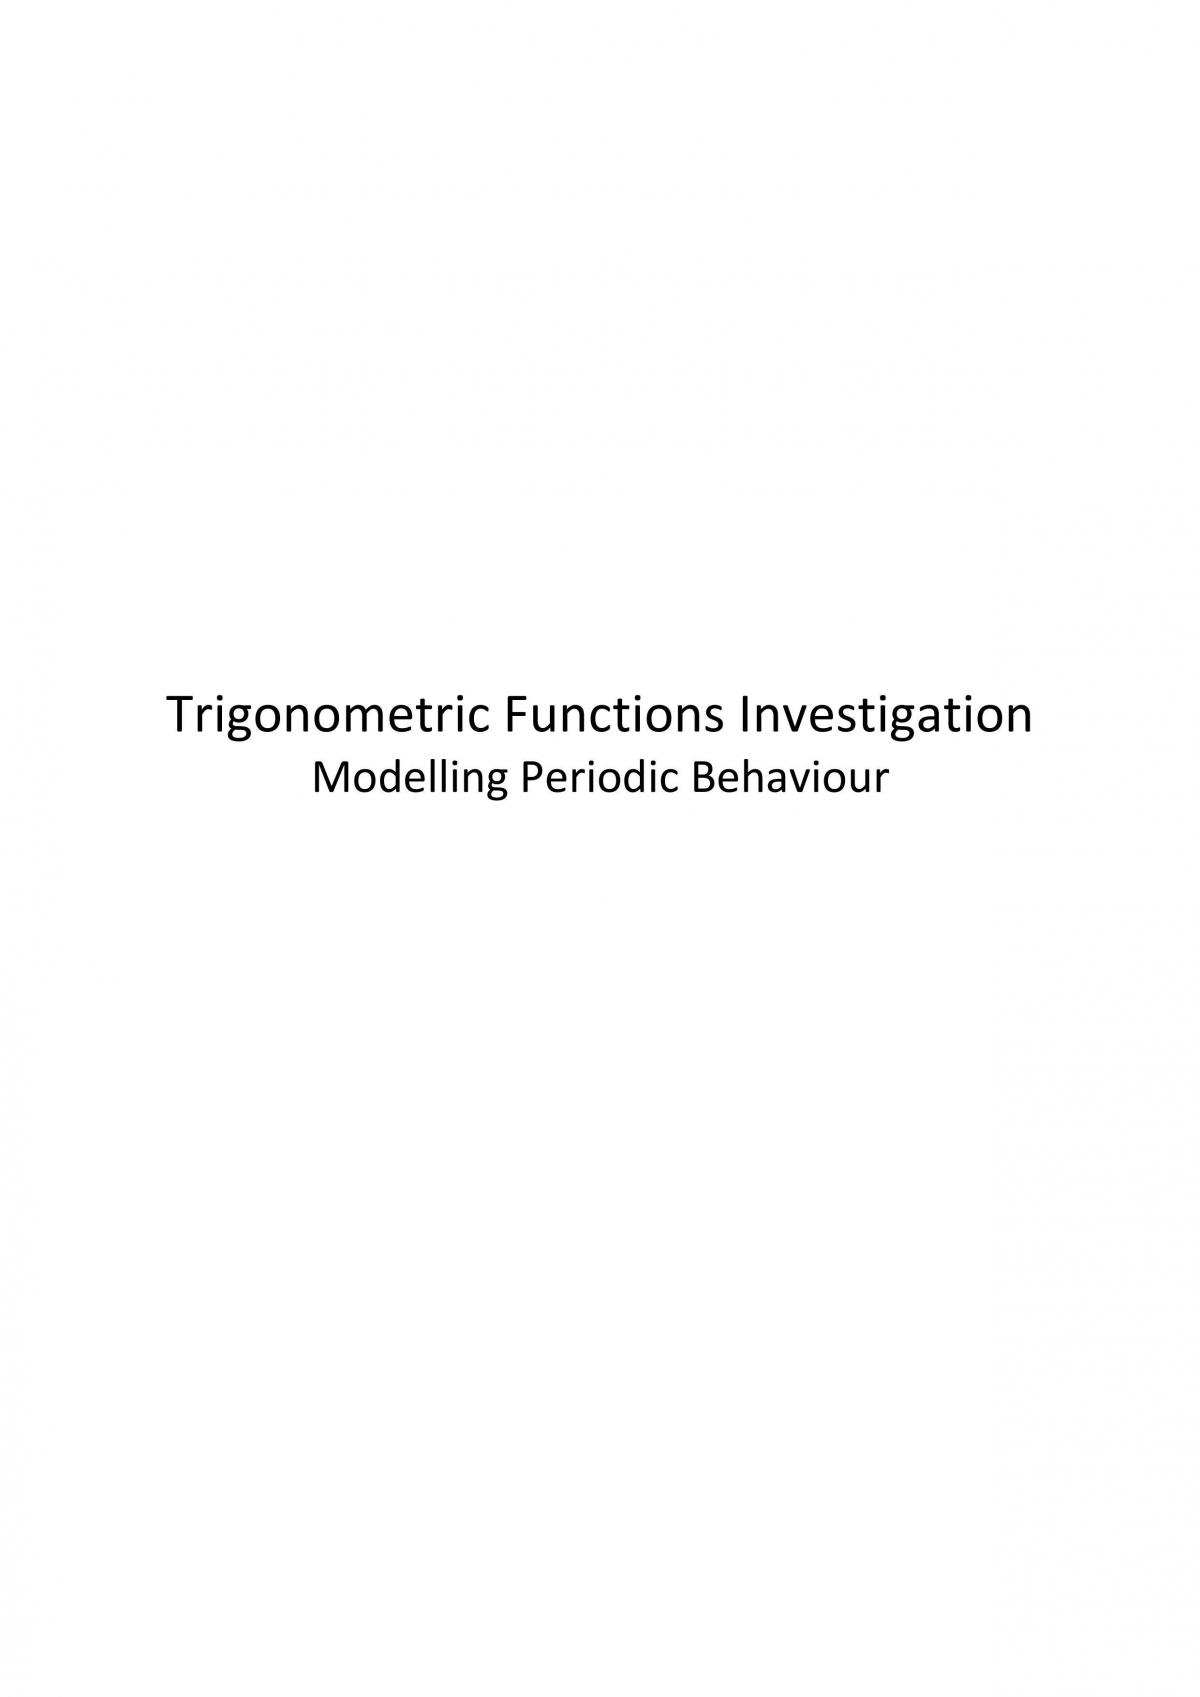 Modelling Periodic Behaviour - Page 1